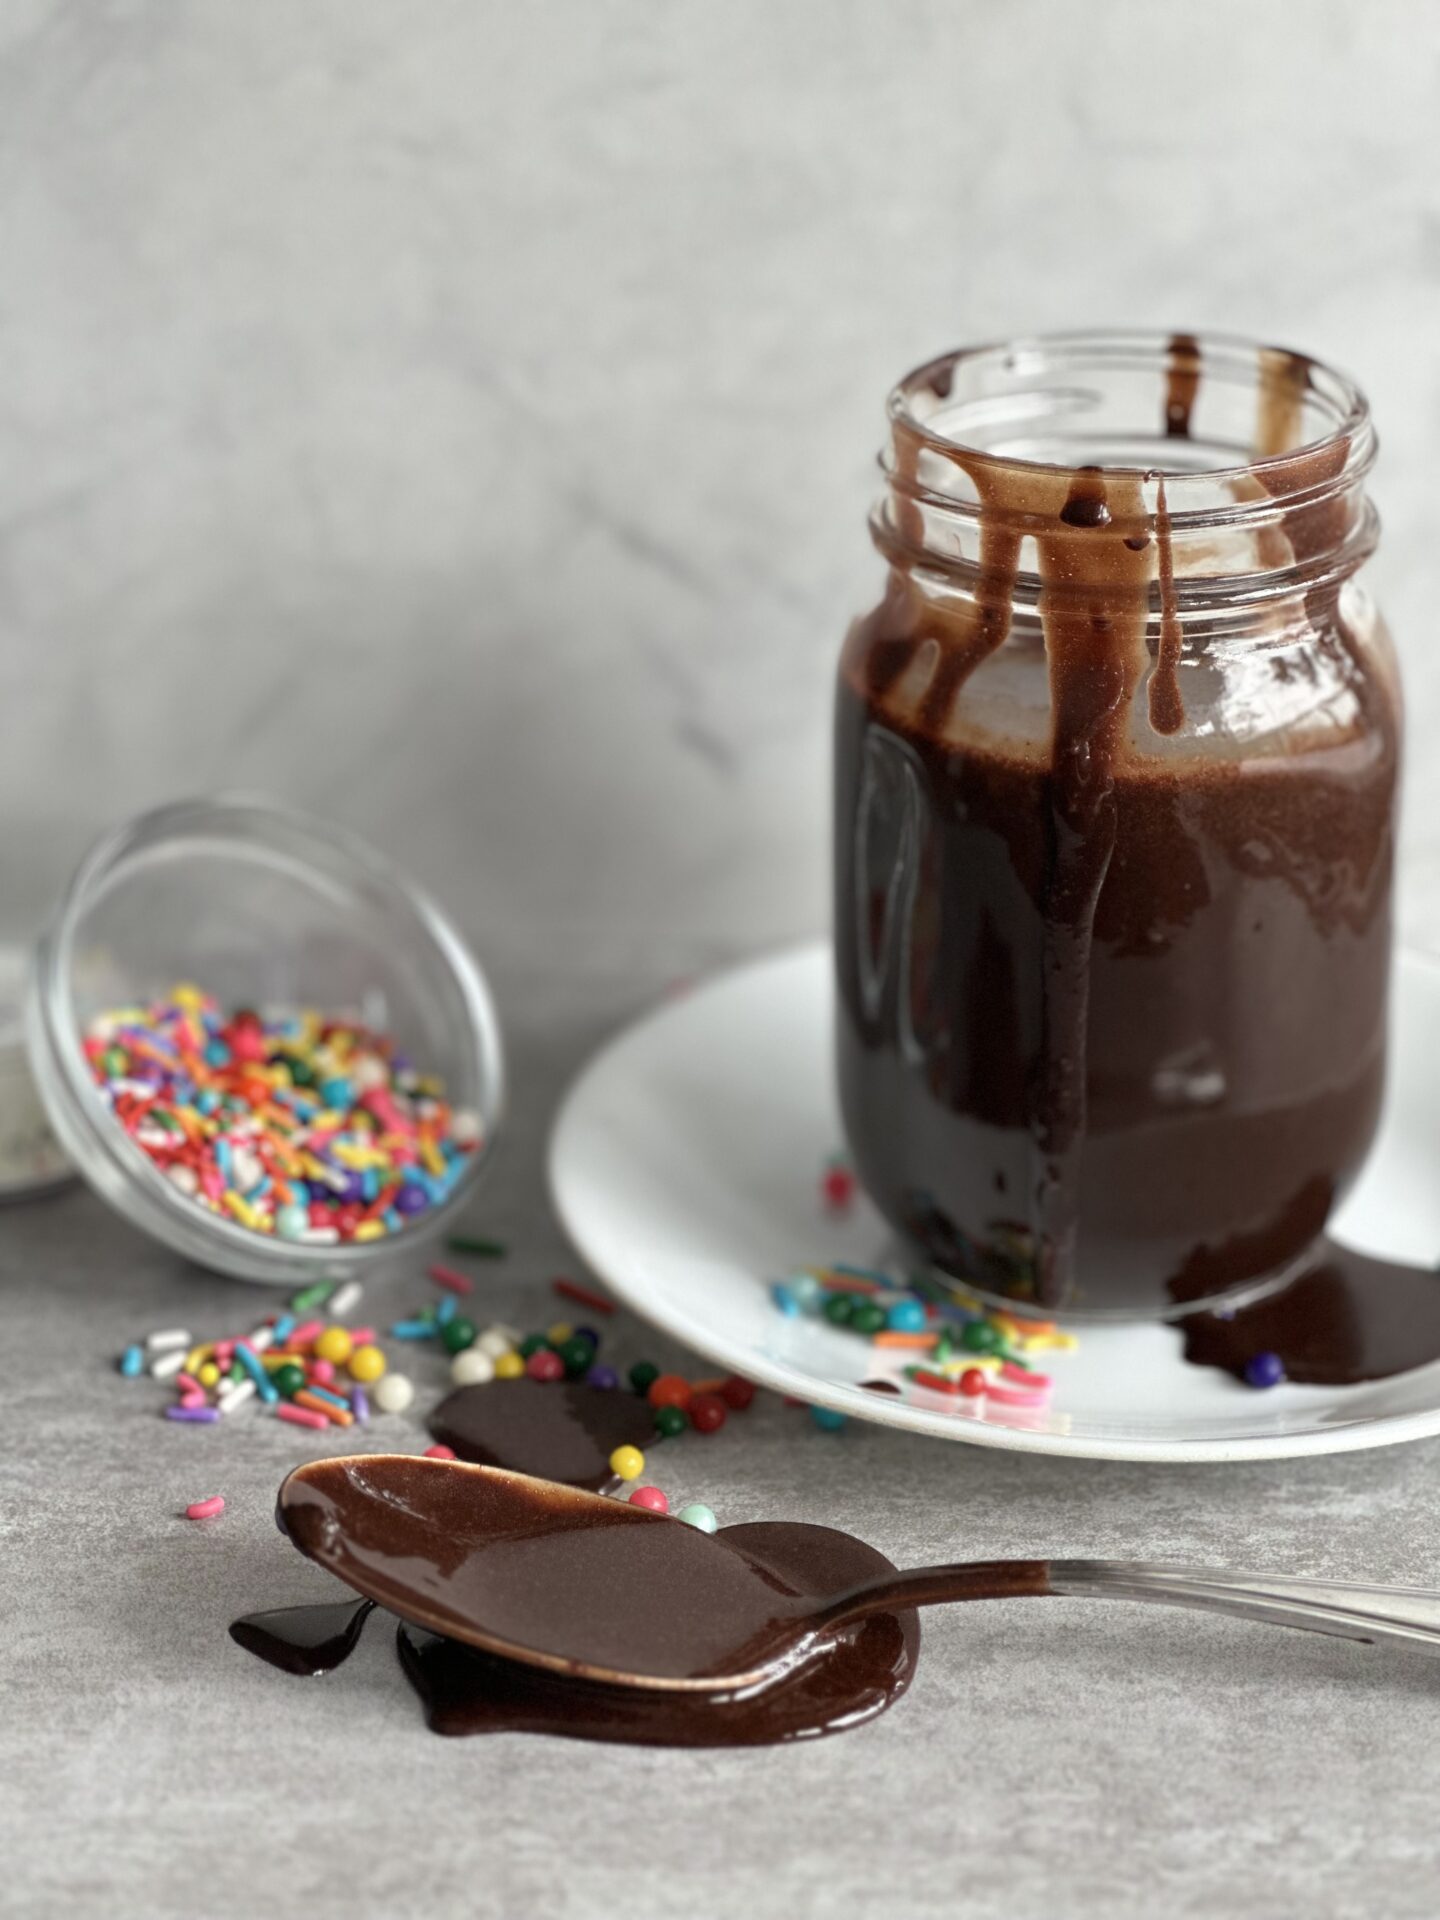 A glass jar of hot chocolate fudge sauce surrounded by drips of chocolate fudge sauce and colourful sprinkles